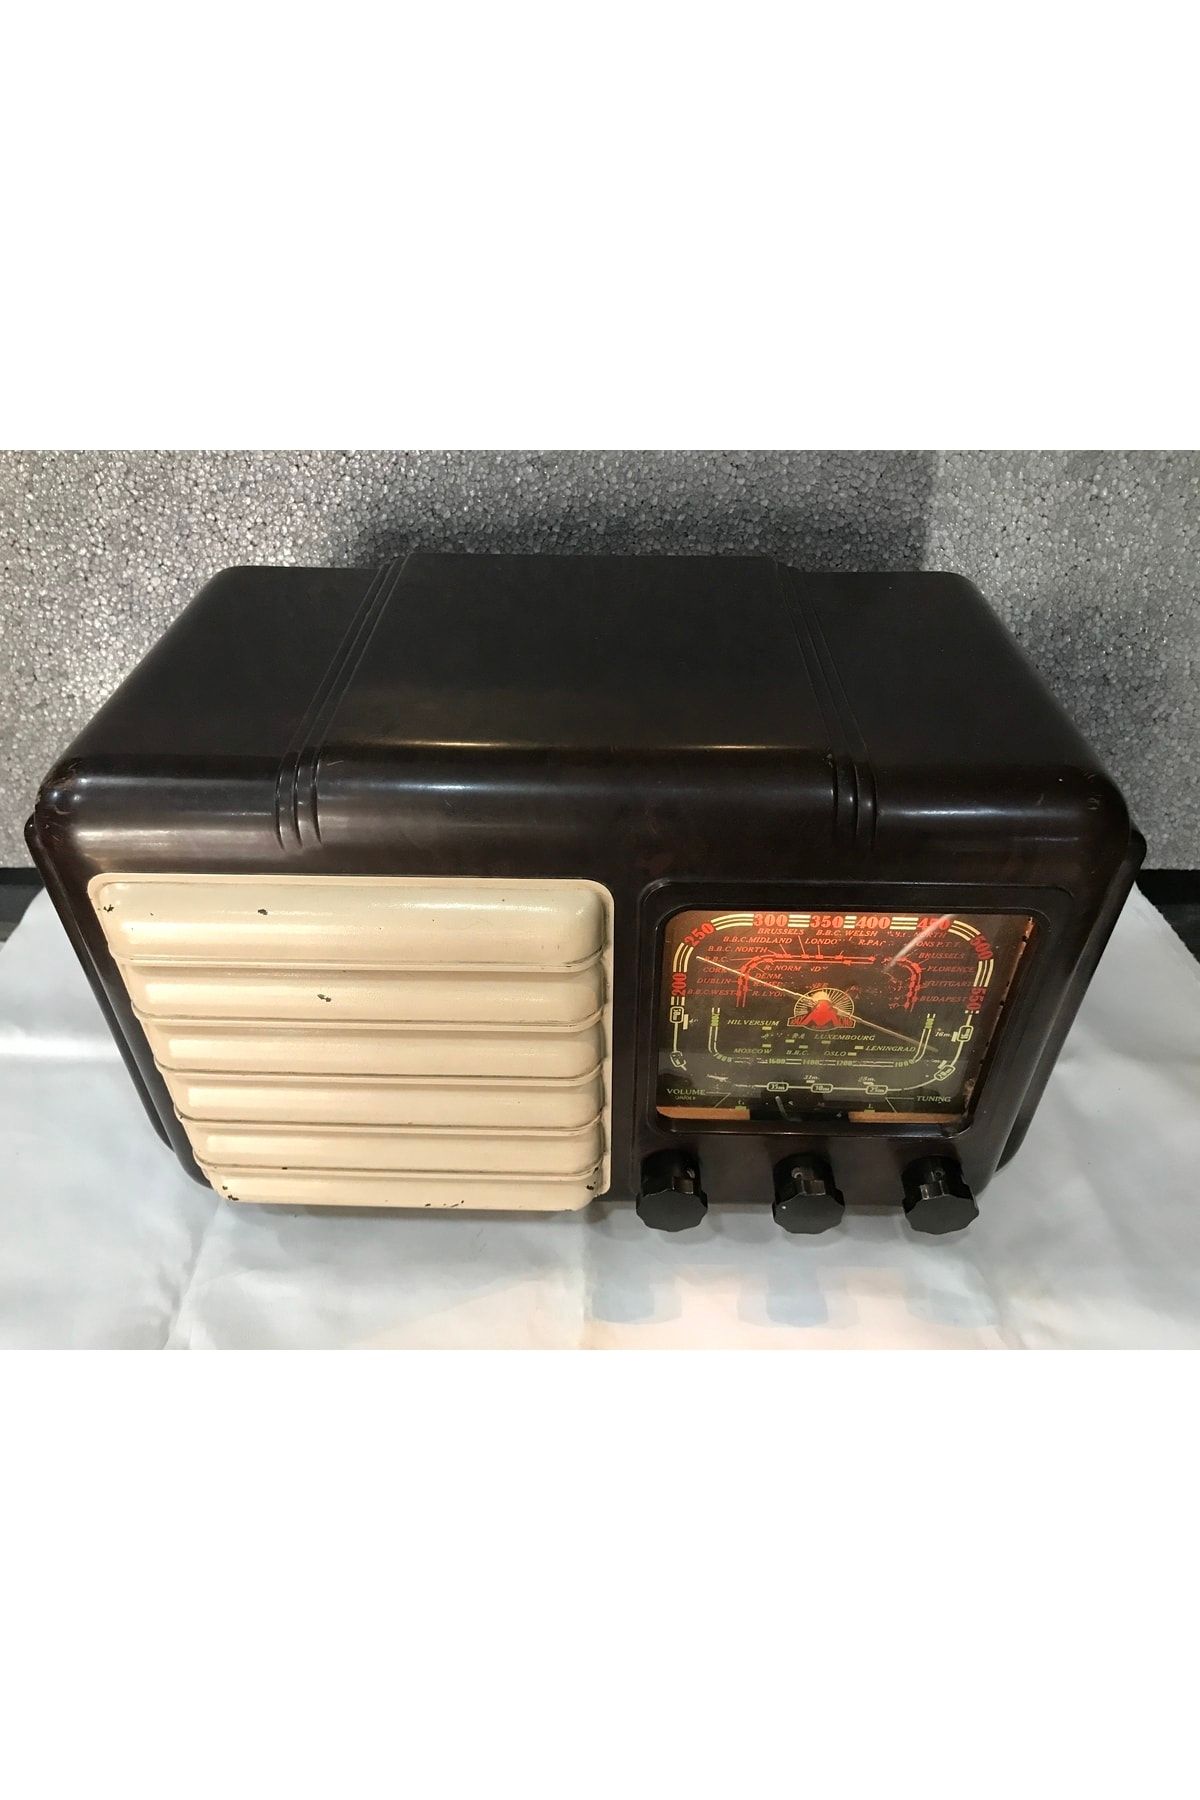 Raymond Electric Marka Antika Lambalı Radyo